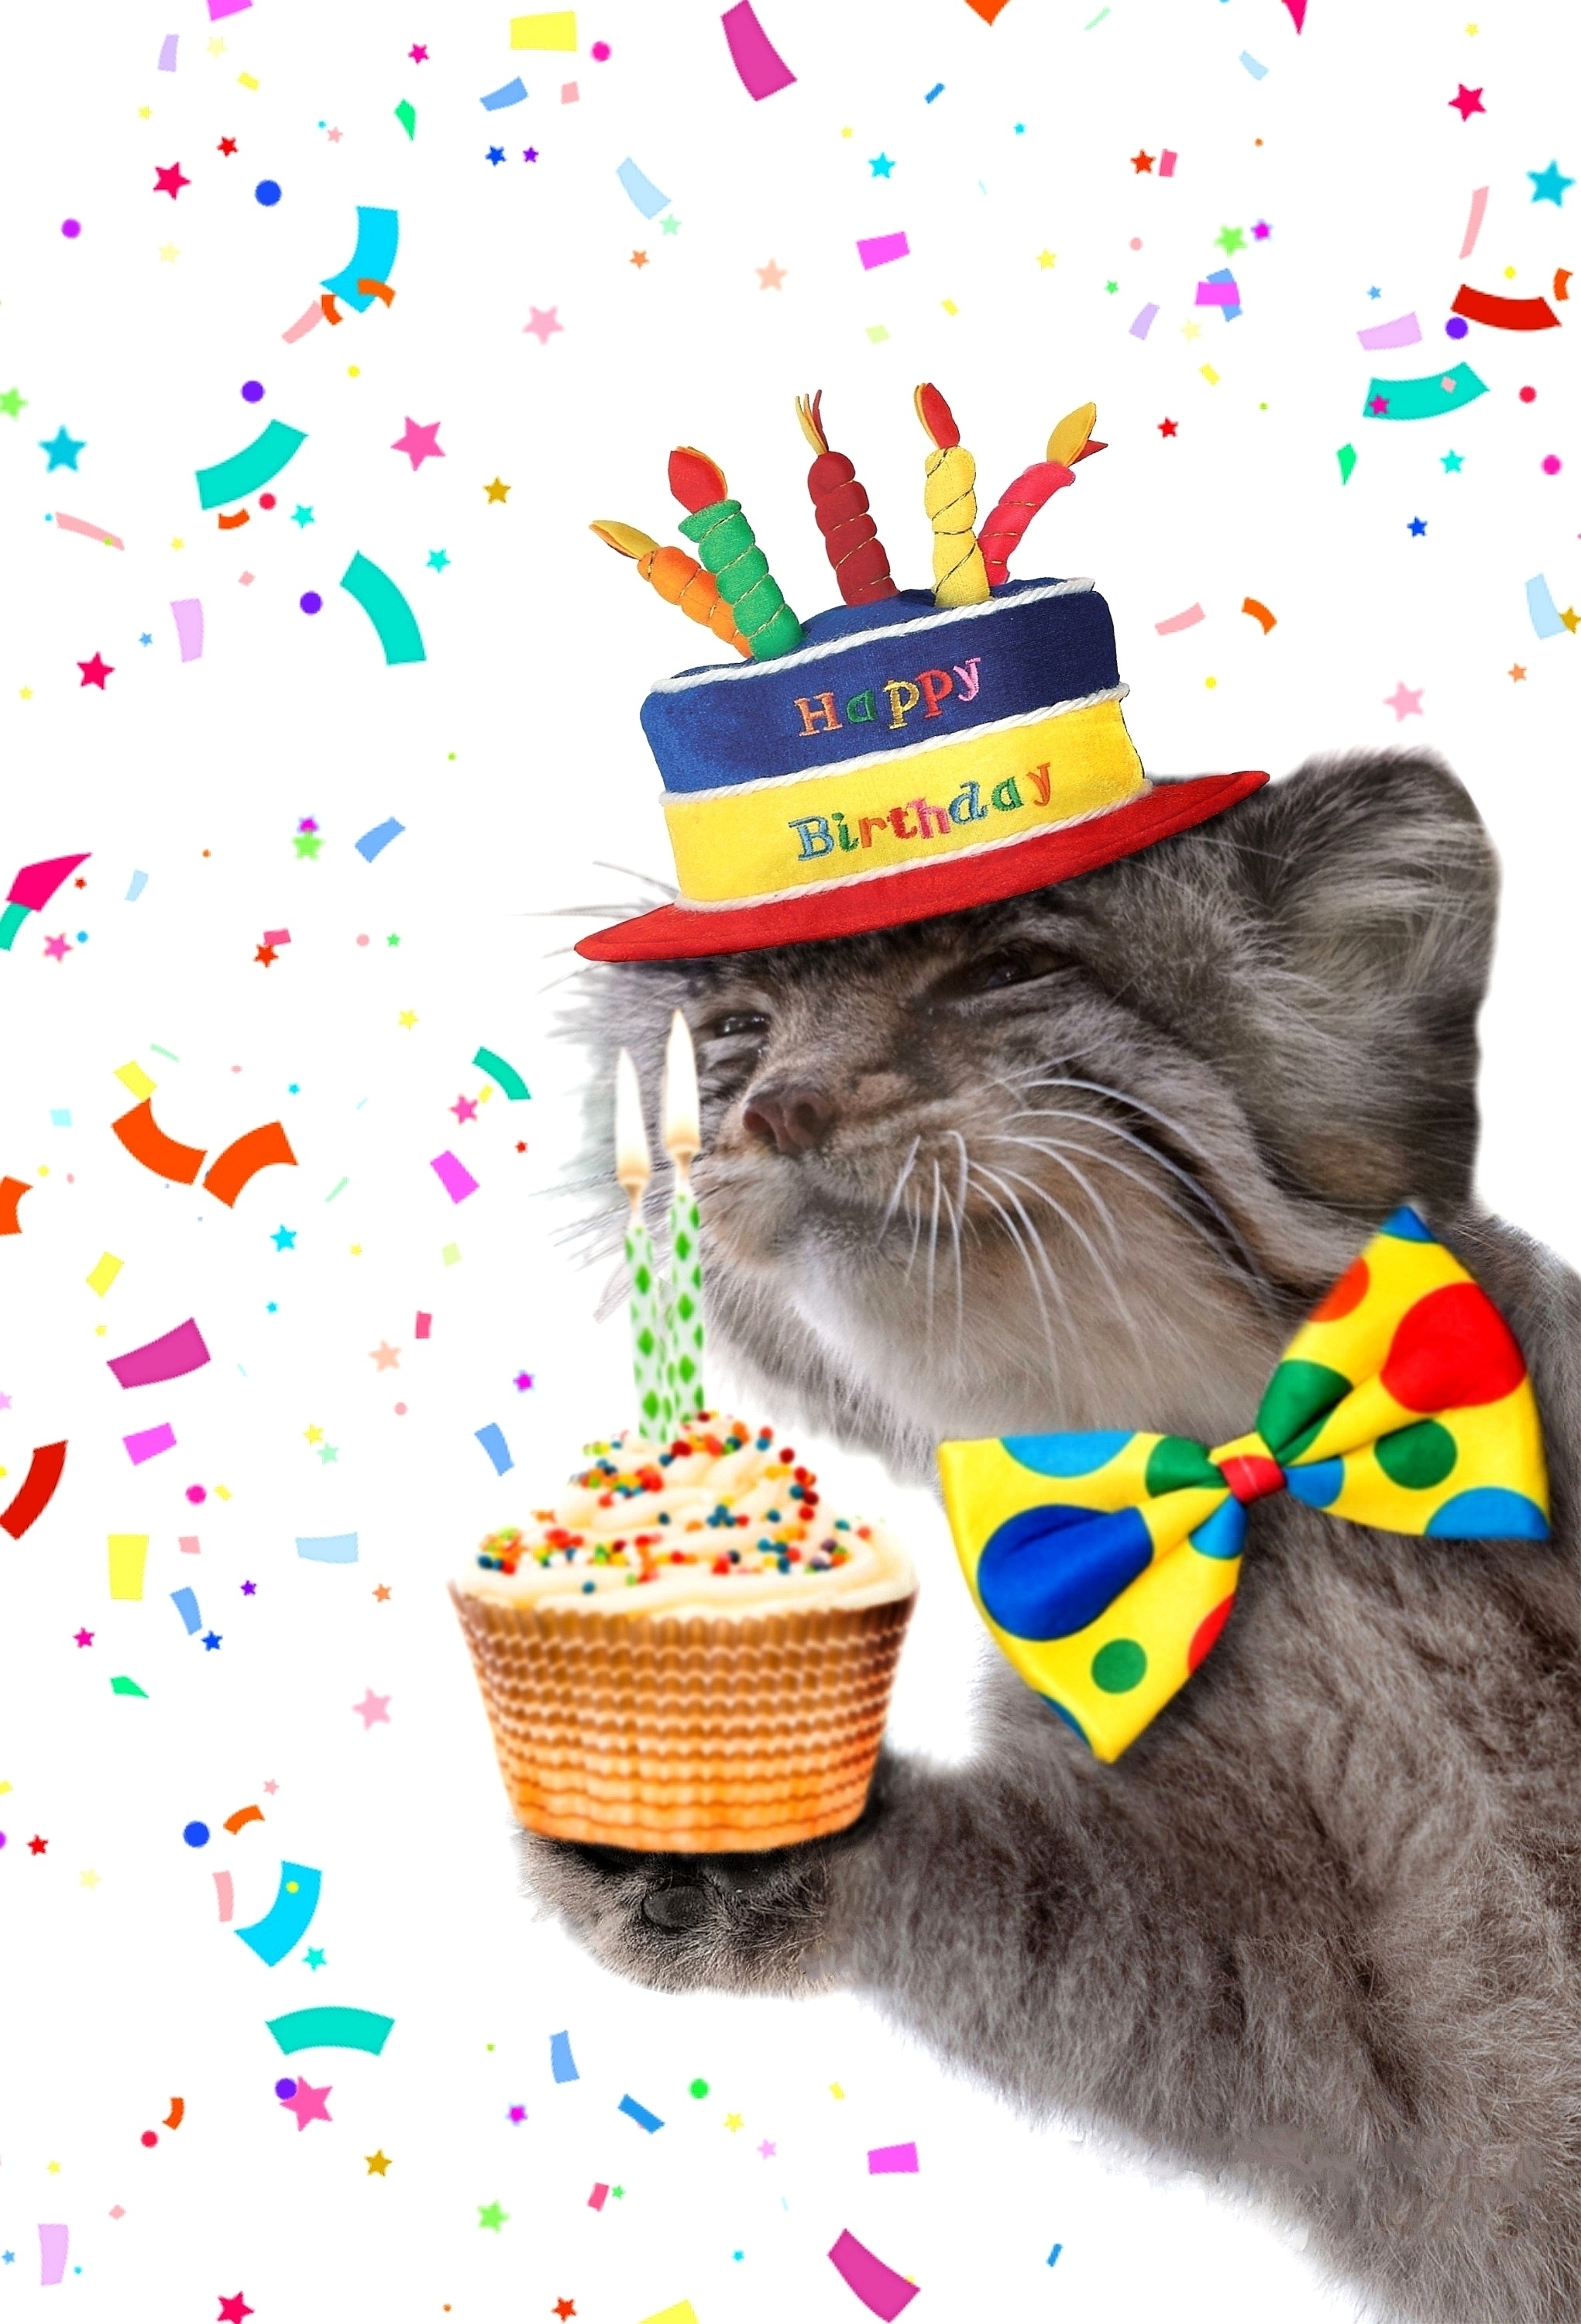 Hooray! Two whole years! - Congratulation, Holidays, Pallas' cat, Small cats, Predatory animals, Cat family, Wish, Wild animals, Images, Photoshop